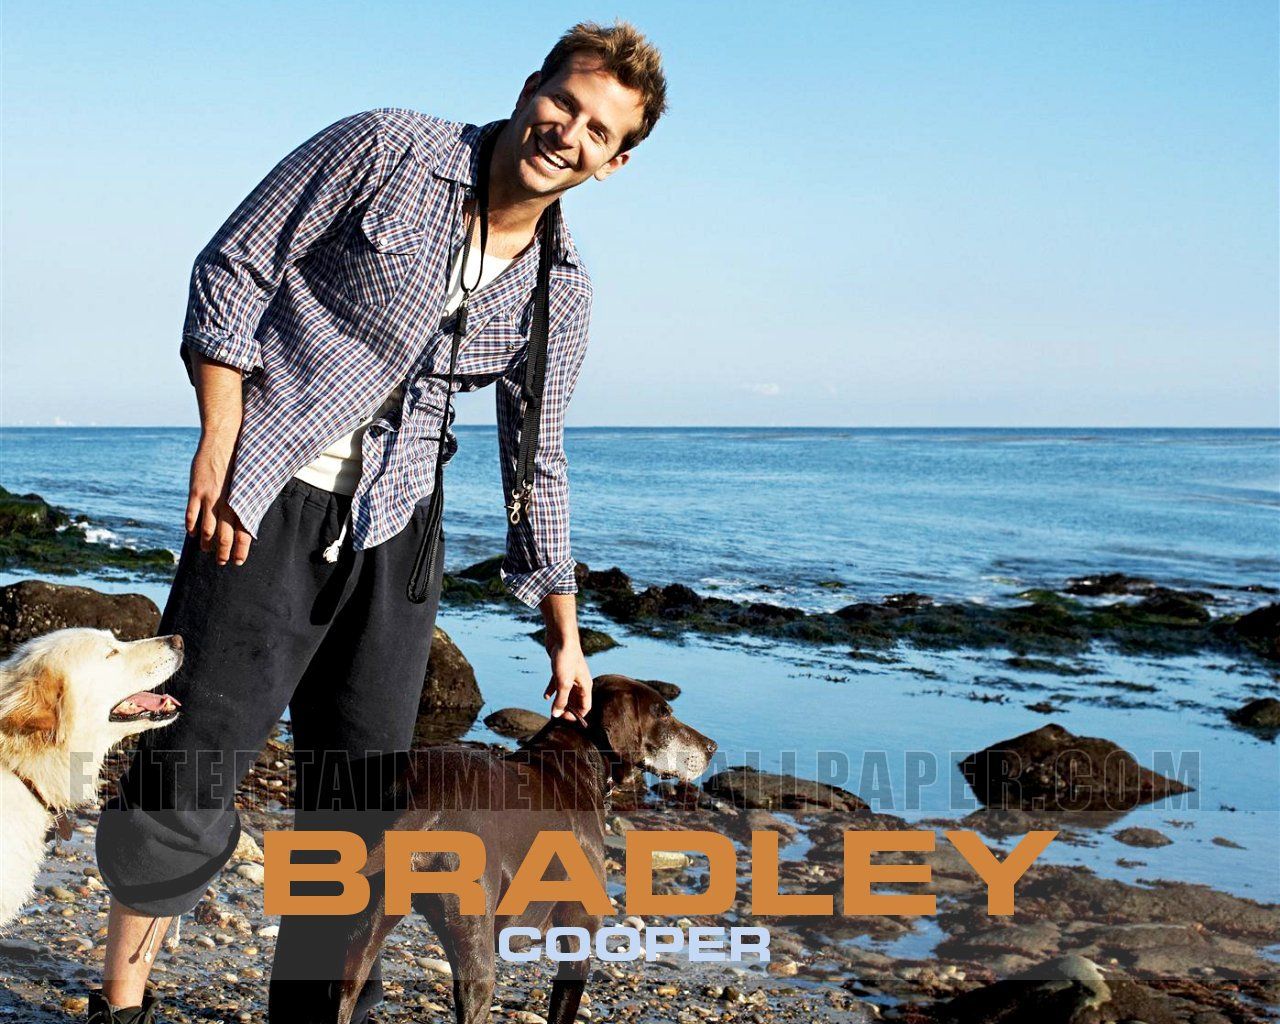 Bradley cooper - Bradley Cooper Wallpaper 23904577 - Fanpop